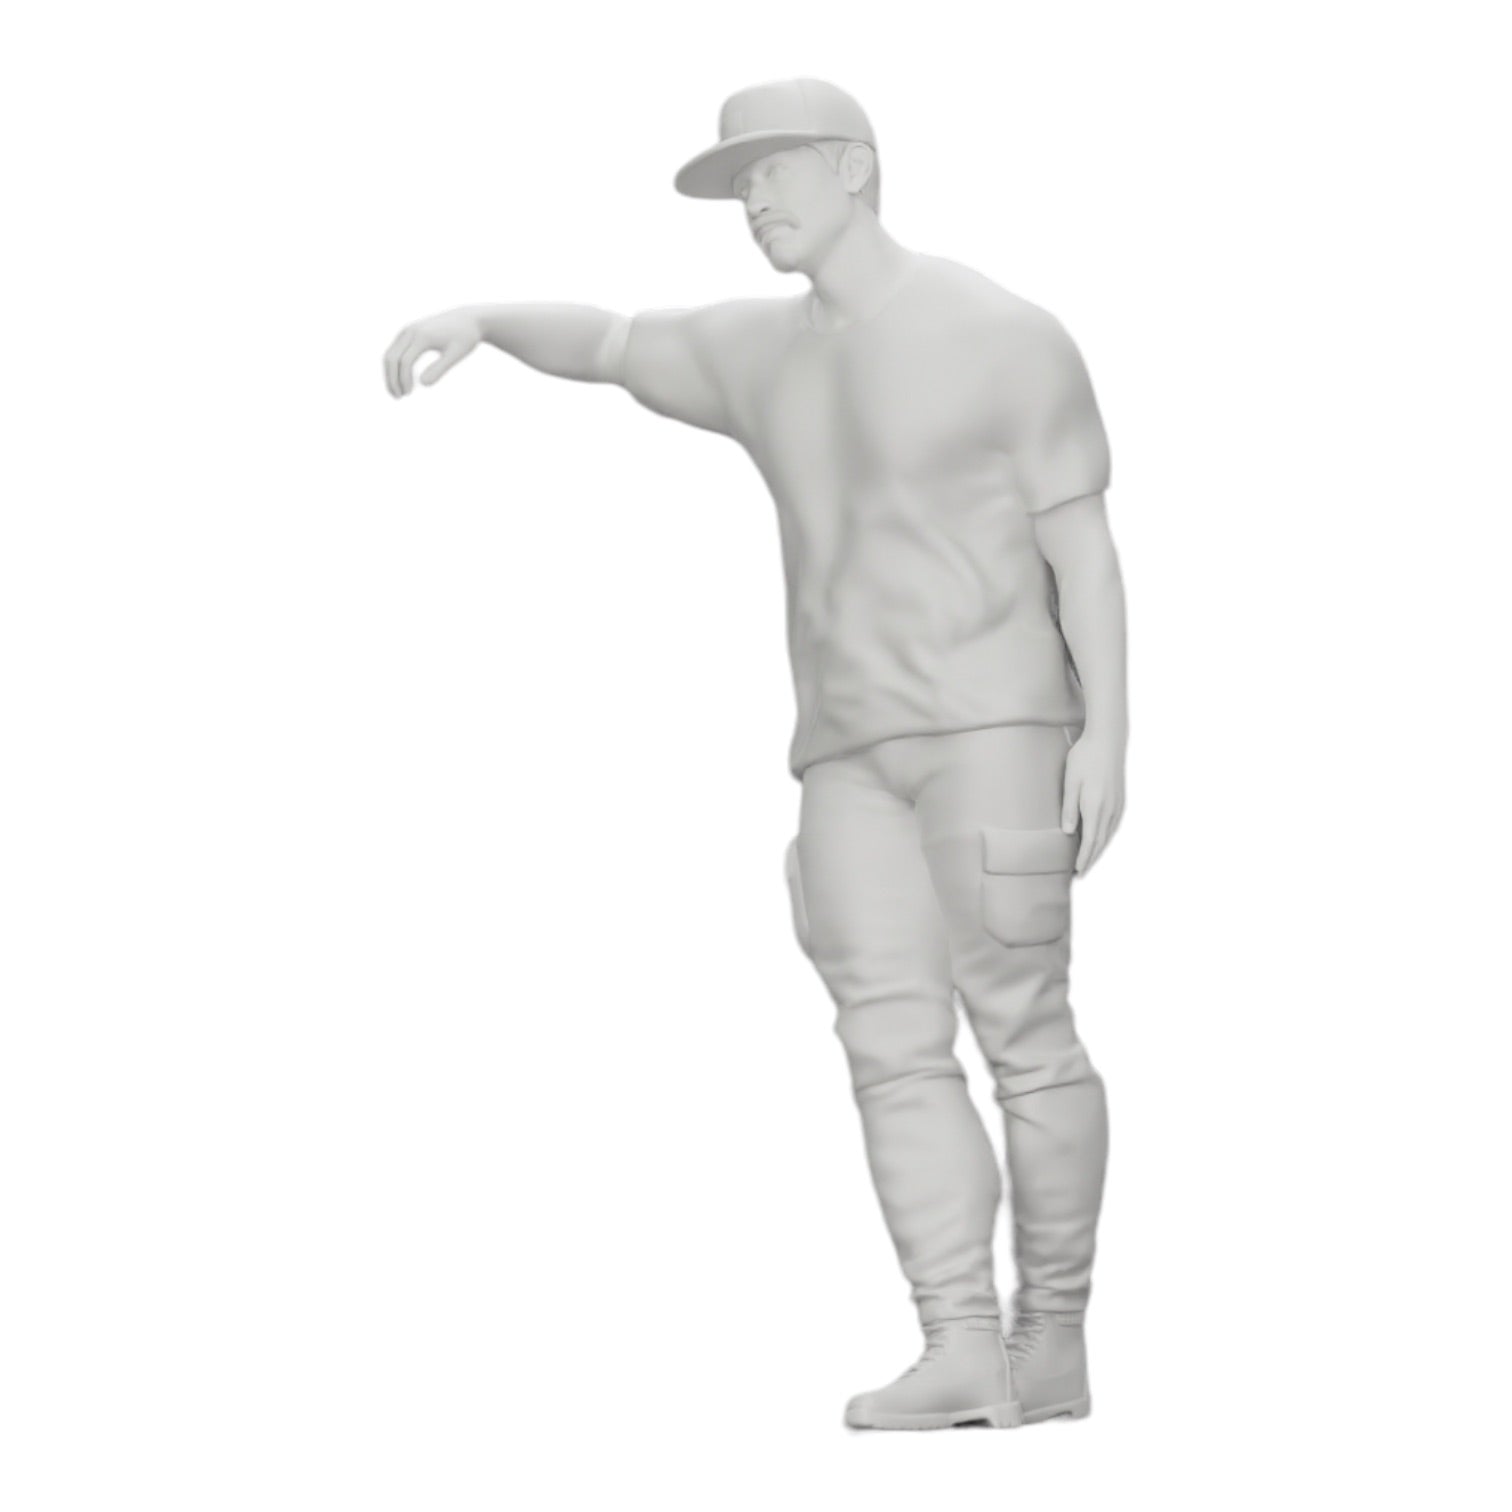 Diorama Modellbau Produktfoto 0: Gangster mit Mütze lehnt an Mauer (Ref Nr. A23)